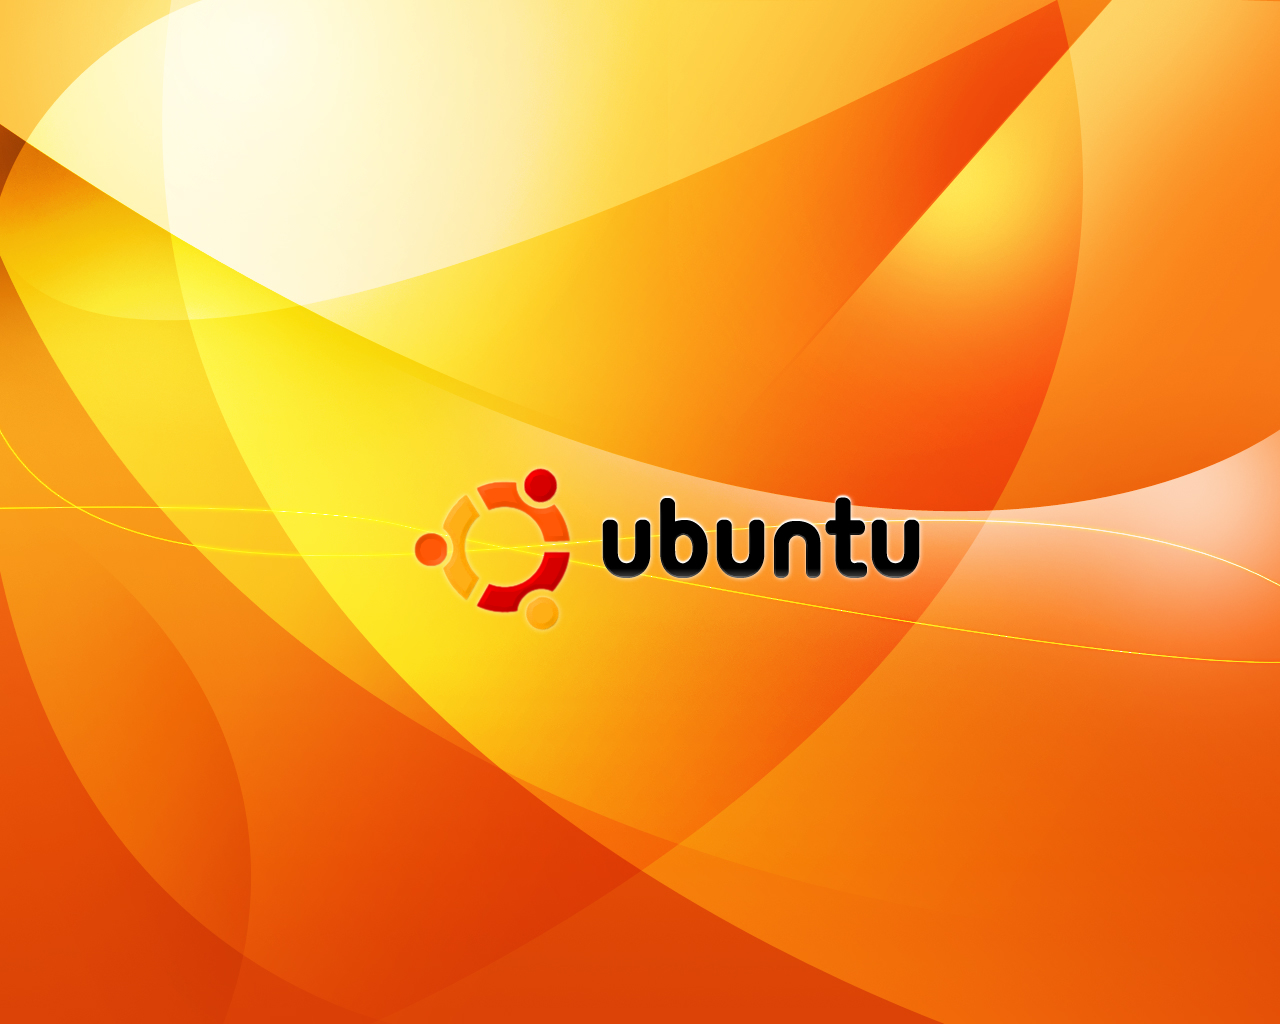 Desktop Wallpaper Linux on Linux Ubuntu Category Computer Systems This Free Desktop Wallpaper Has